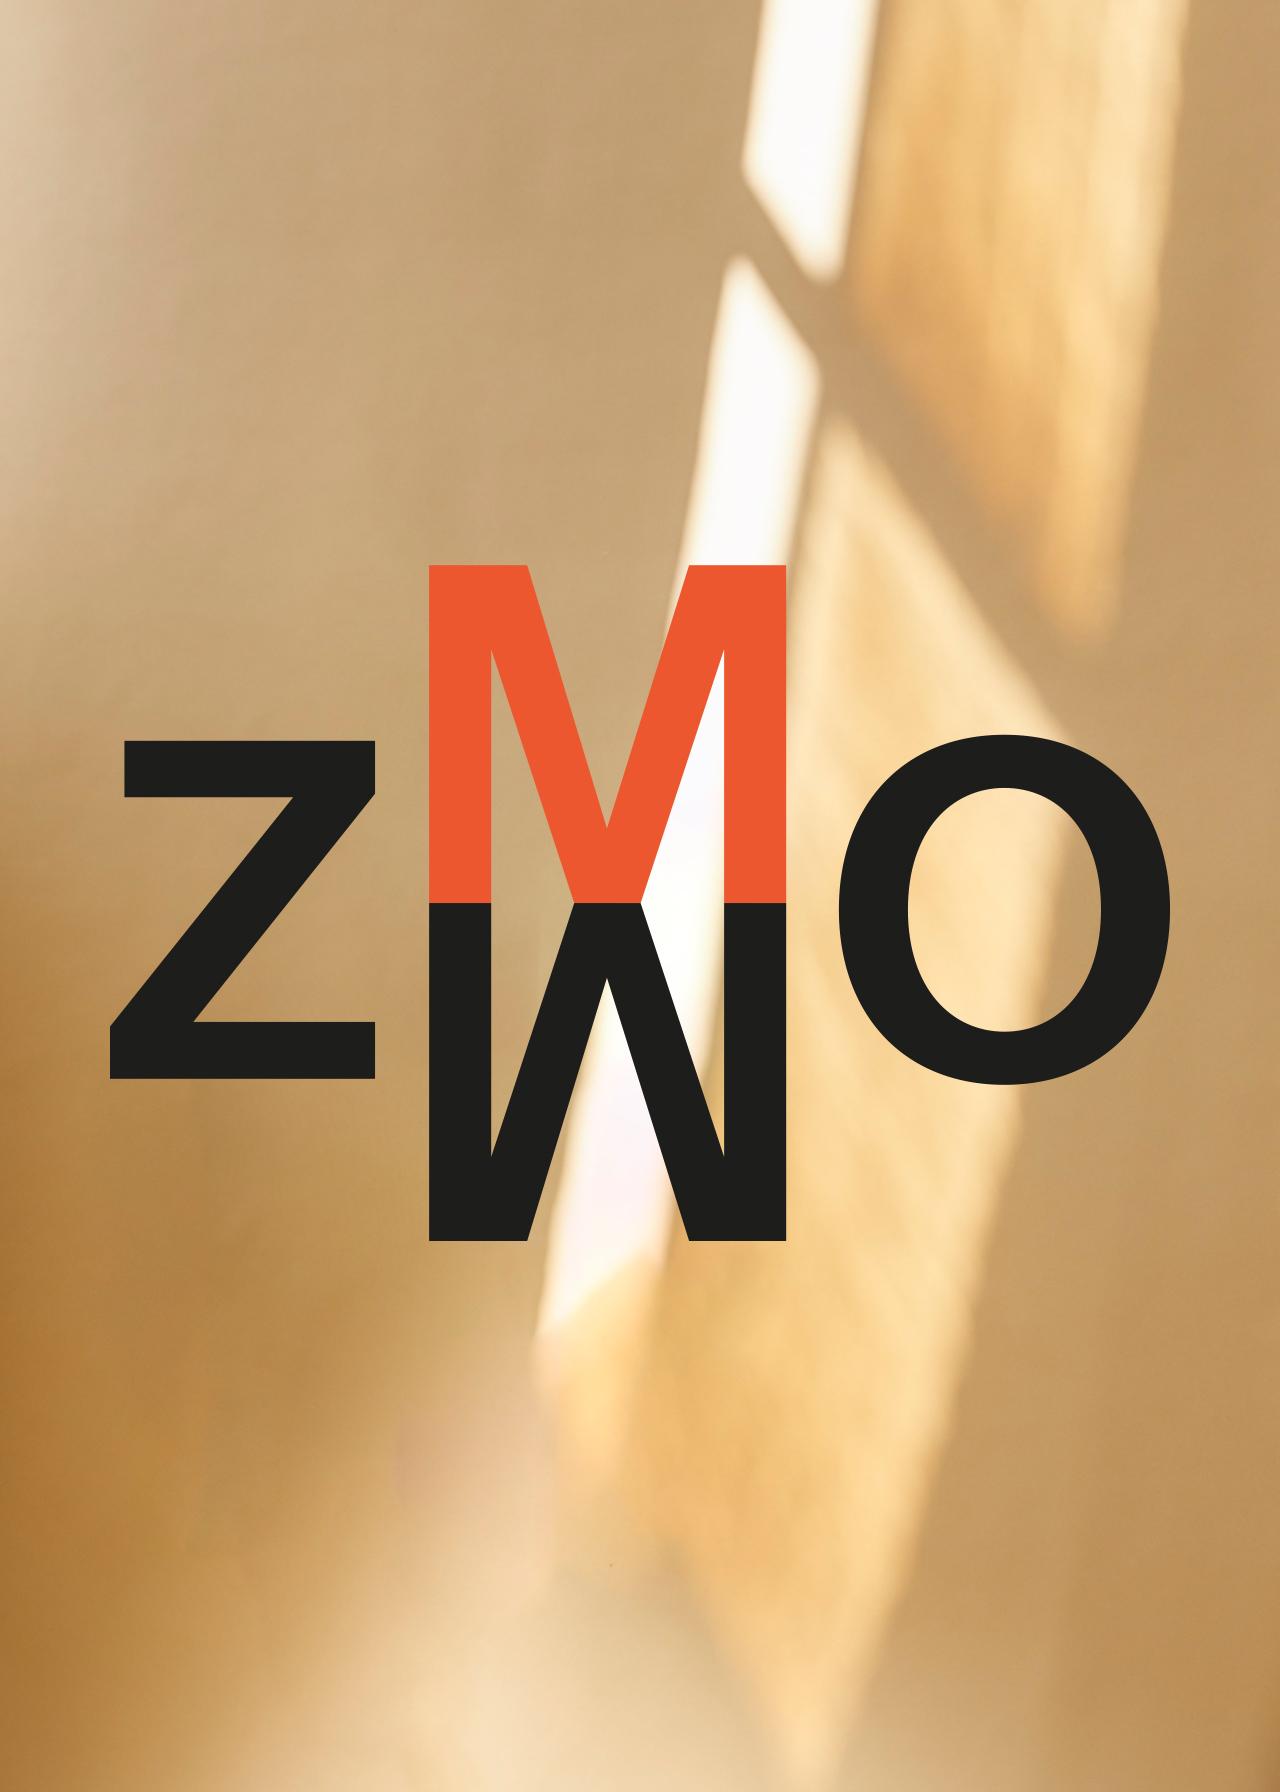 Thumbnail des Projekts MZWO Architekt*innen